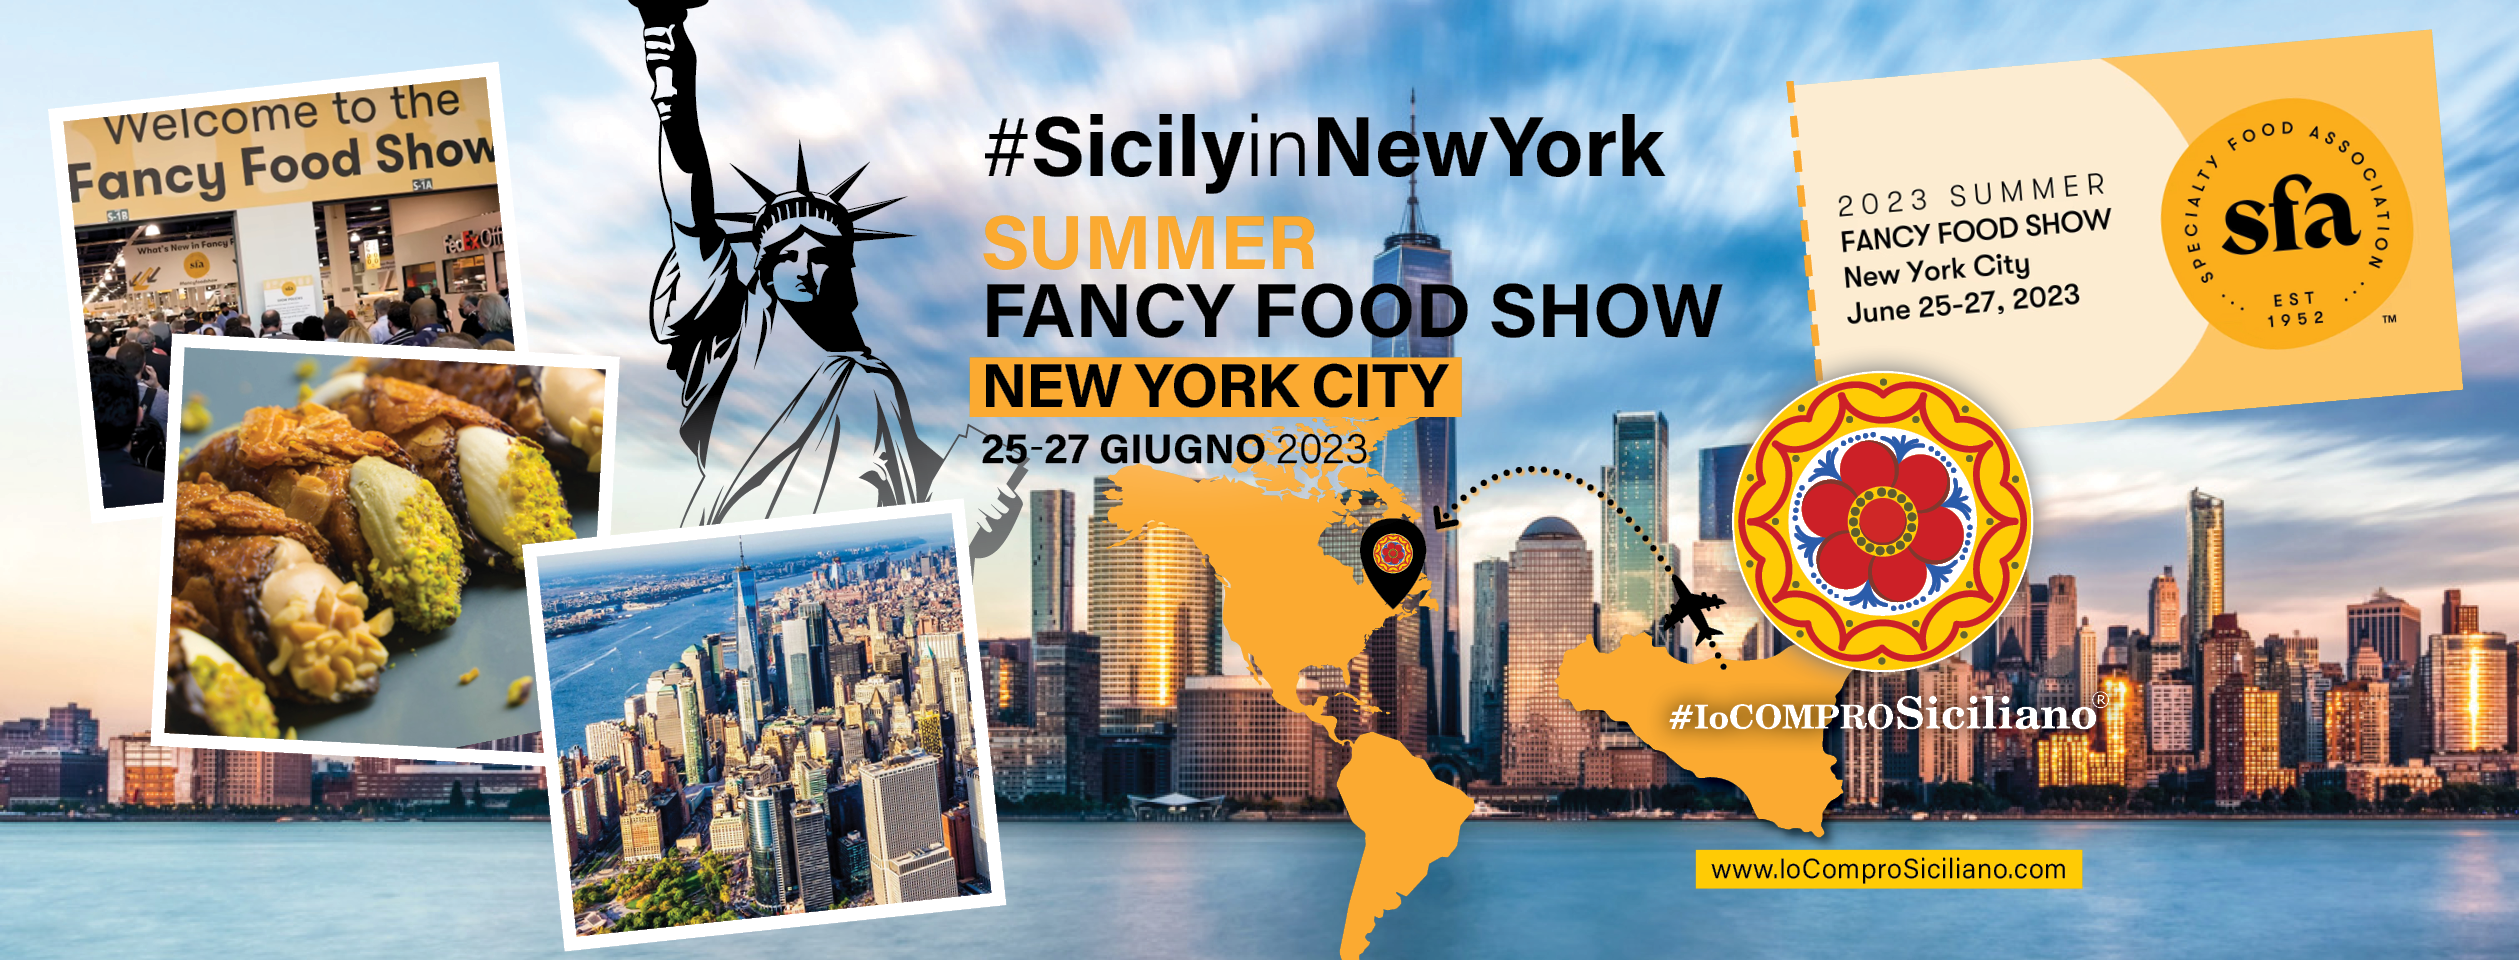 Summer Fancy Food -New York 25-27 giugno 2023